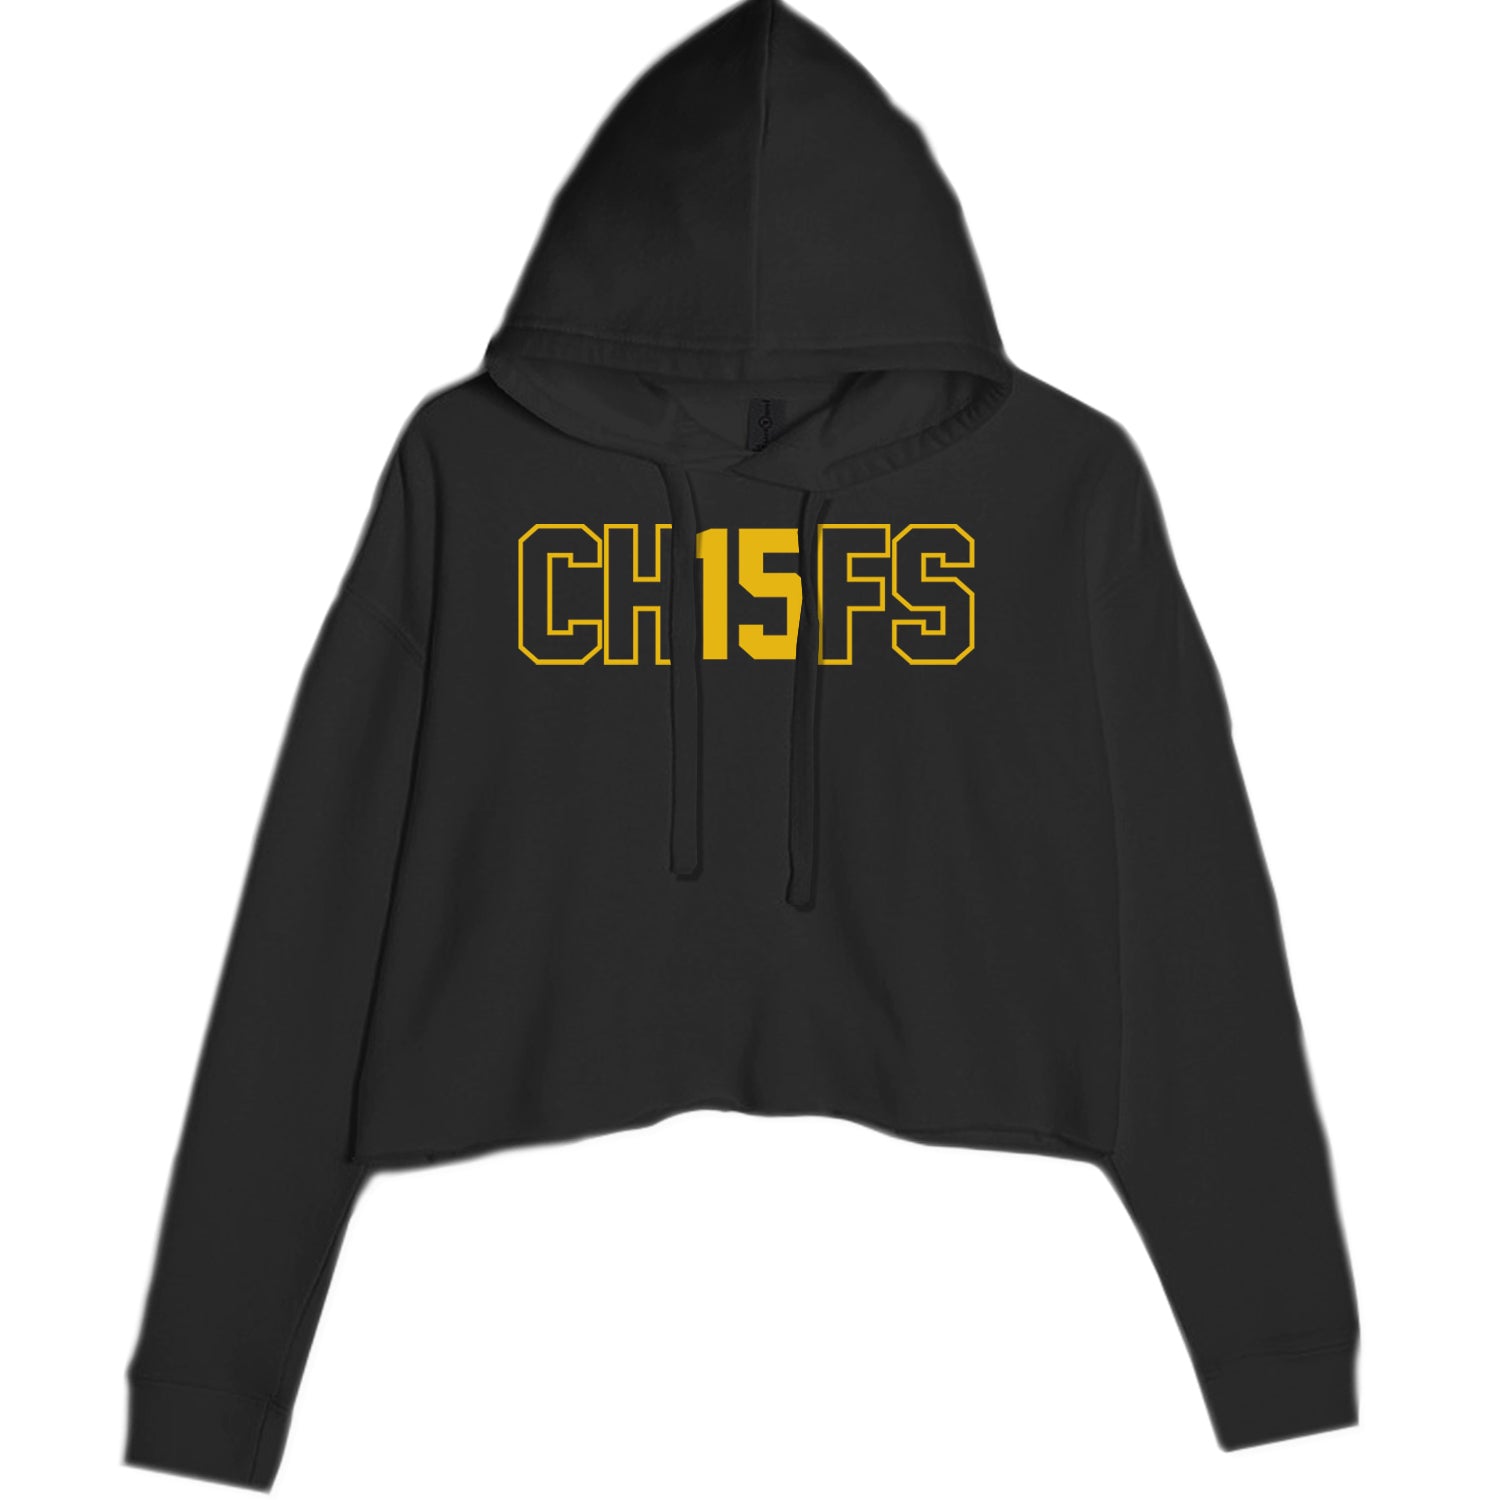 Ch15fs Chief 15 Shirt Cropped Hoodie Sweatshirt Black